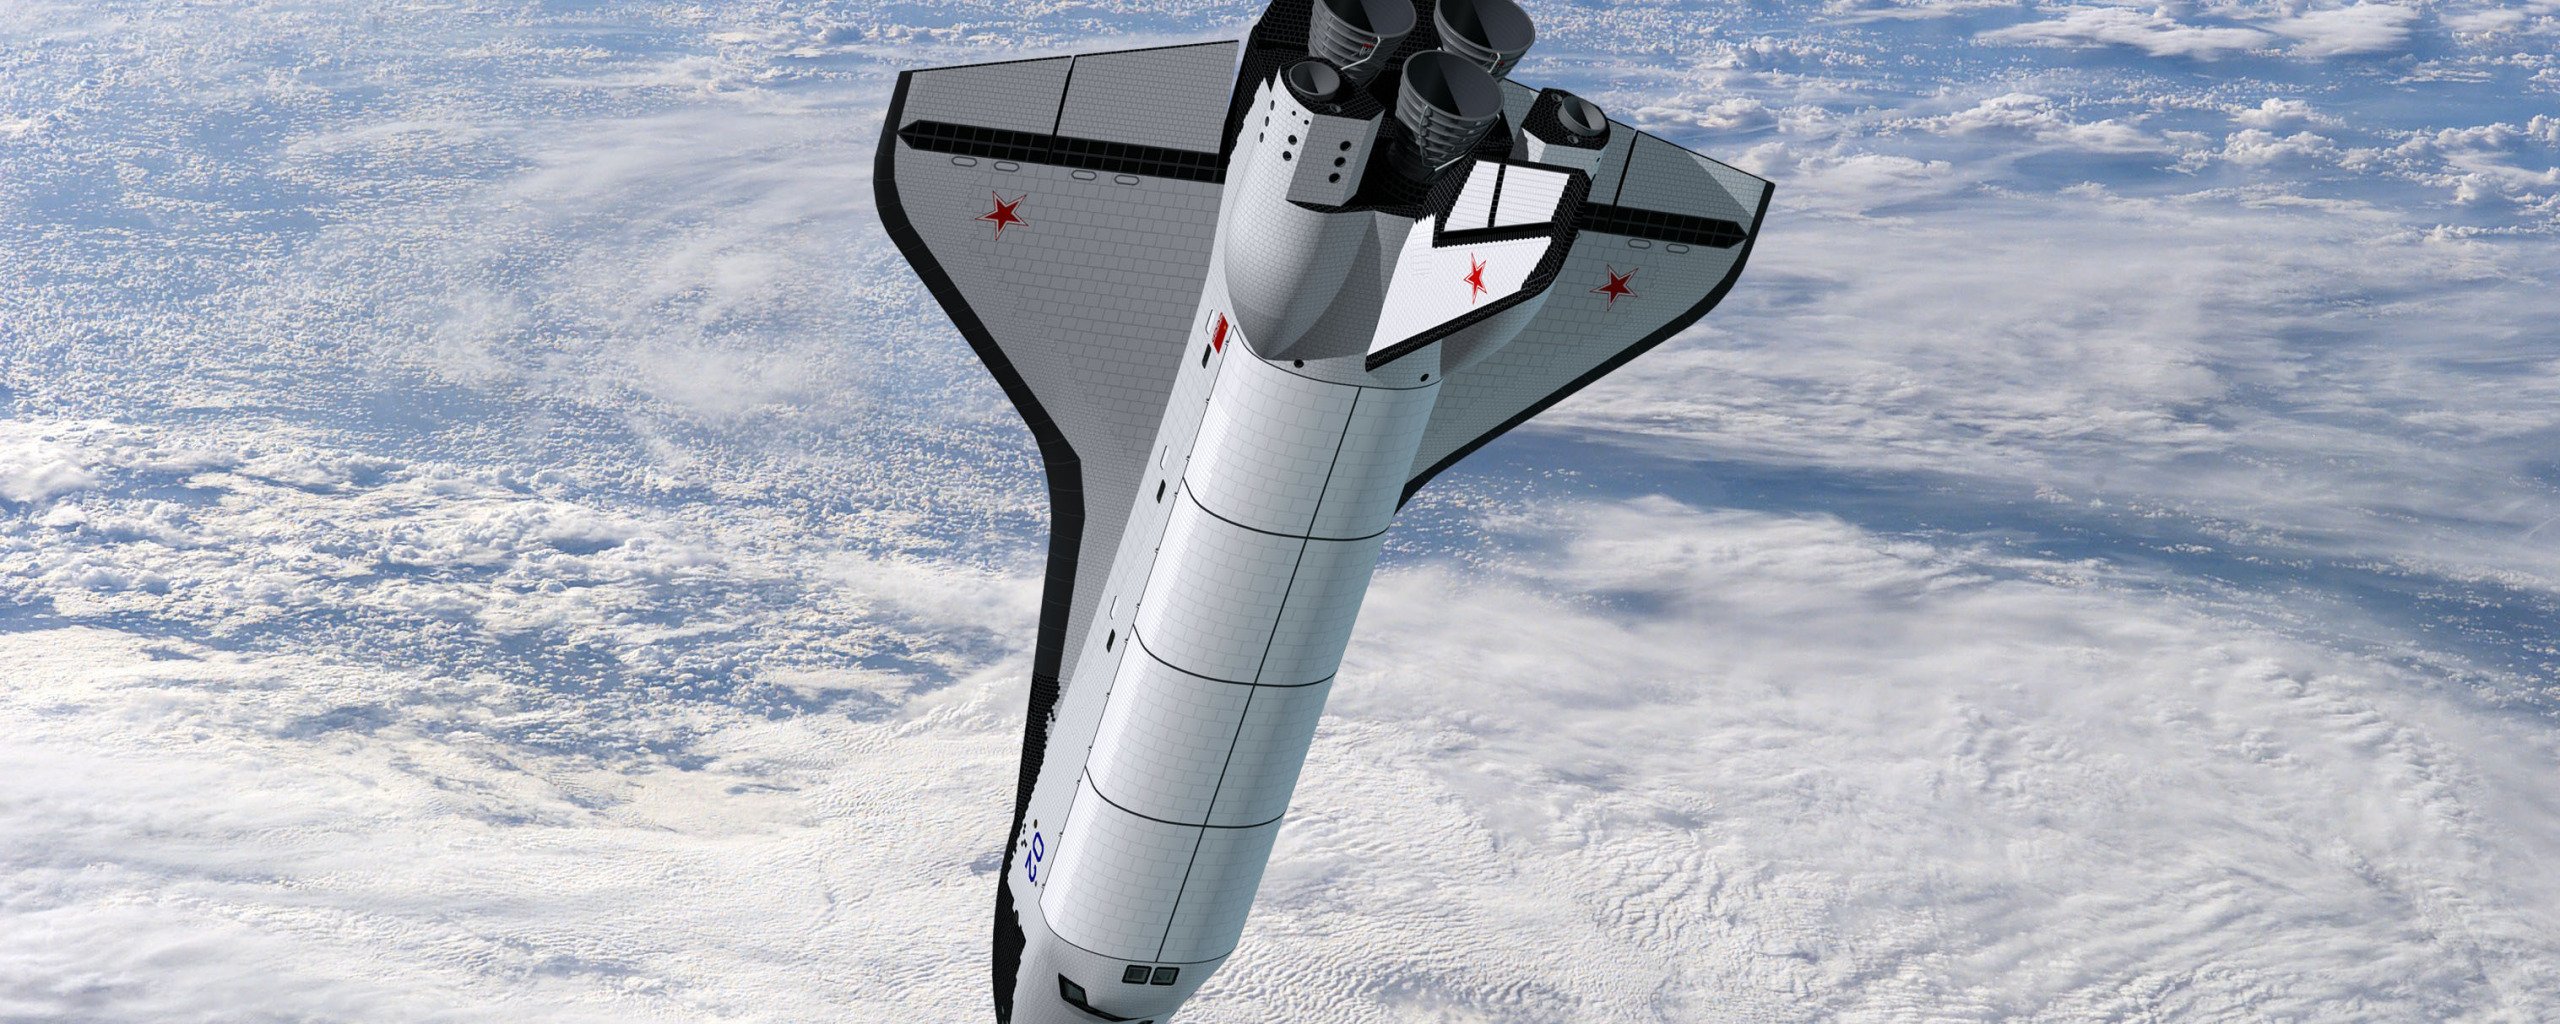 Картинки бурана. Космический корабль Буран. Орбитальный самолет Буран. Проект Буран СССР.